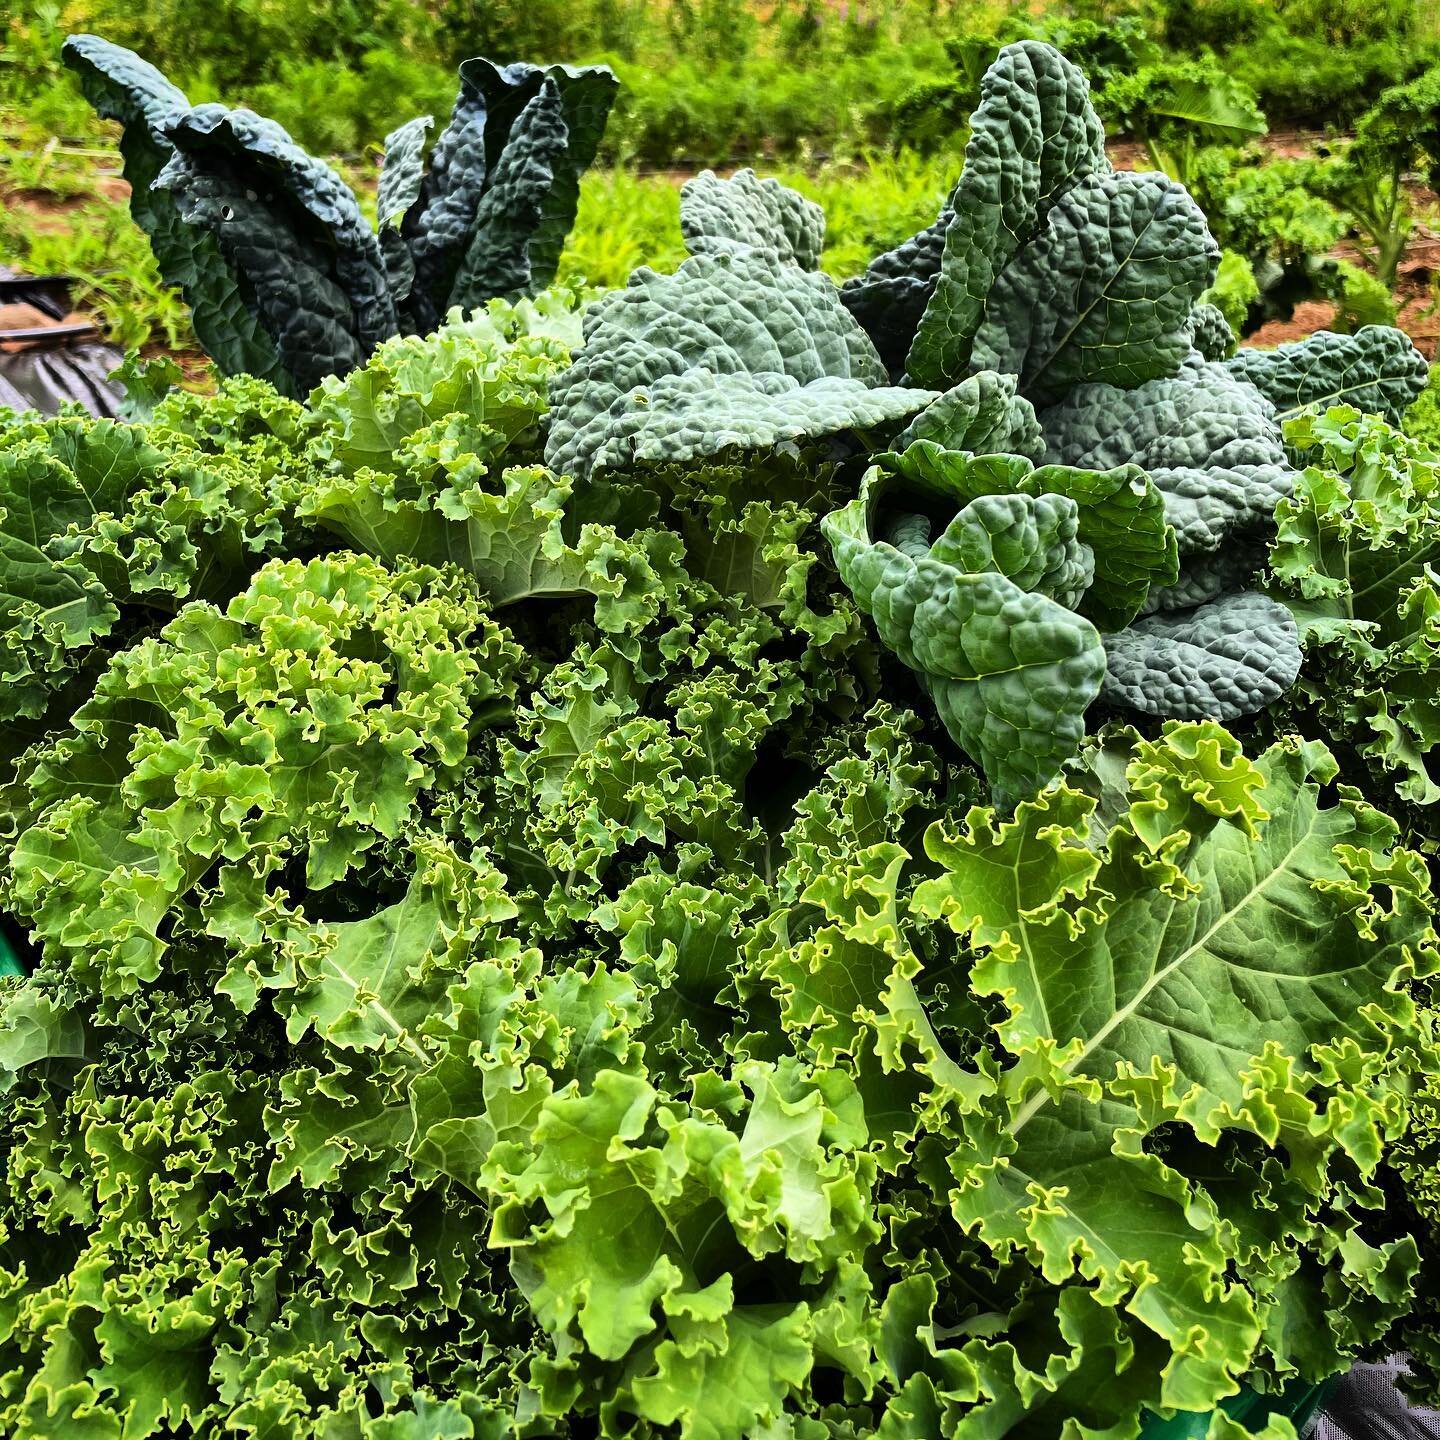 Kale anyone? 🥬 

#kaleharvest #curlykale #blackmagickale #farmergirl #newentrysustainablefarmingproject #chefcapaldi #mjgoodvibes #farming #csa #csadelivery